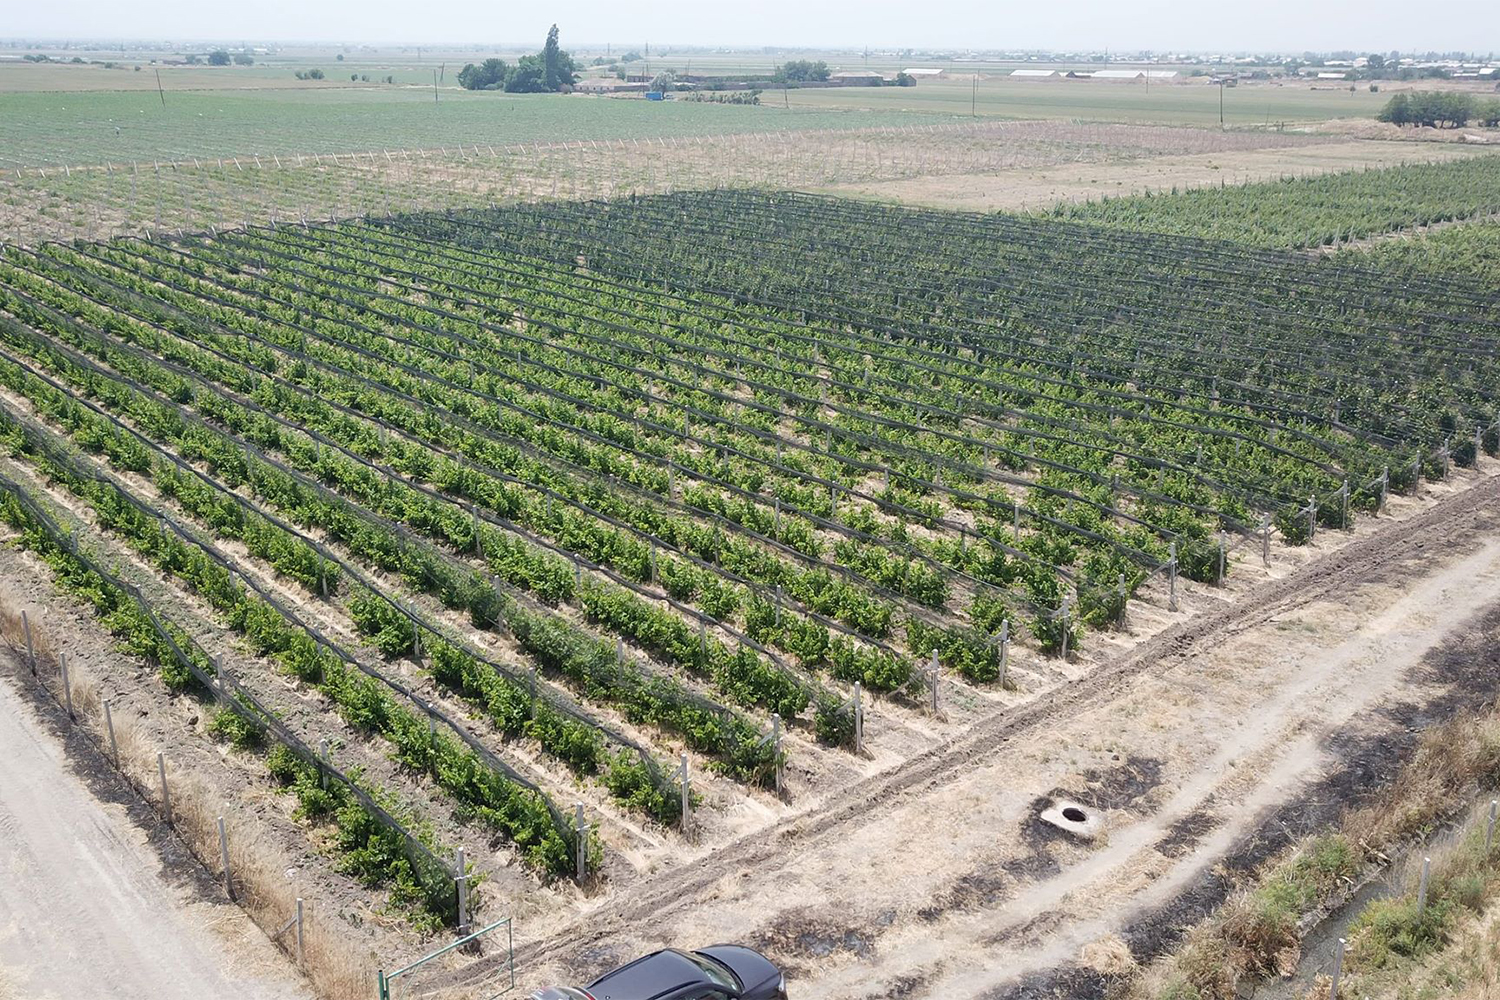 Germans call Armenia a rich “reservoir” of grapevine genotypes 